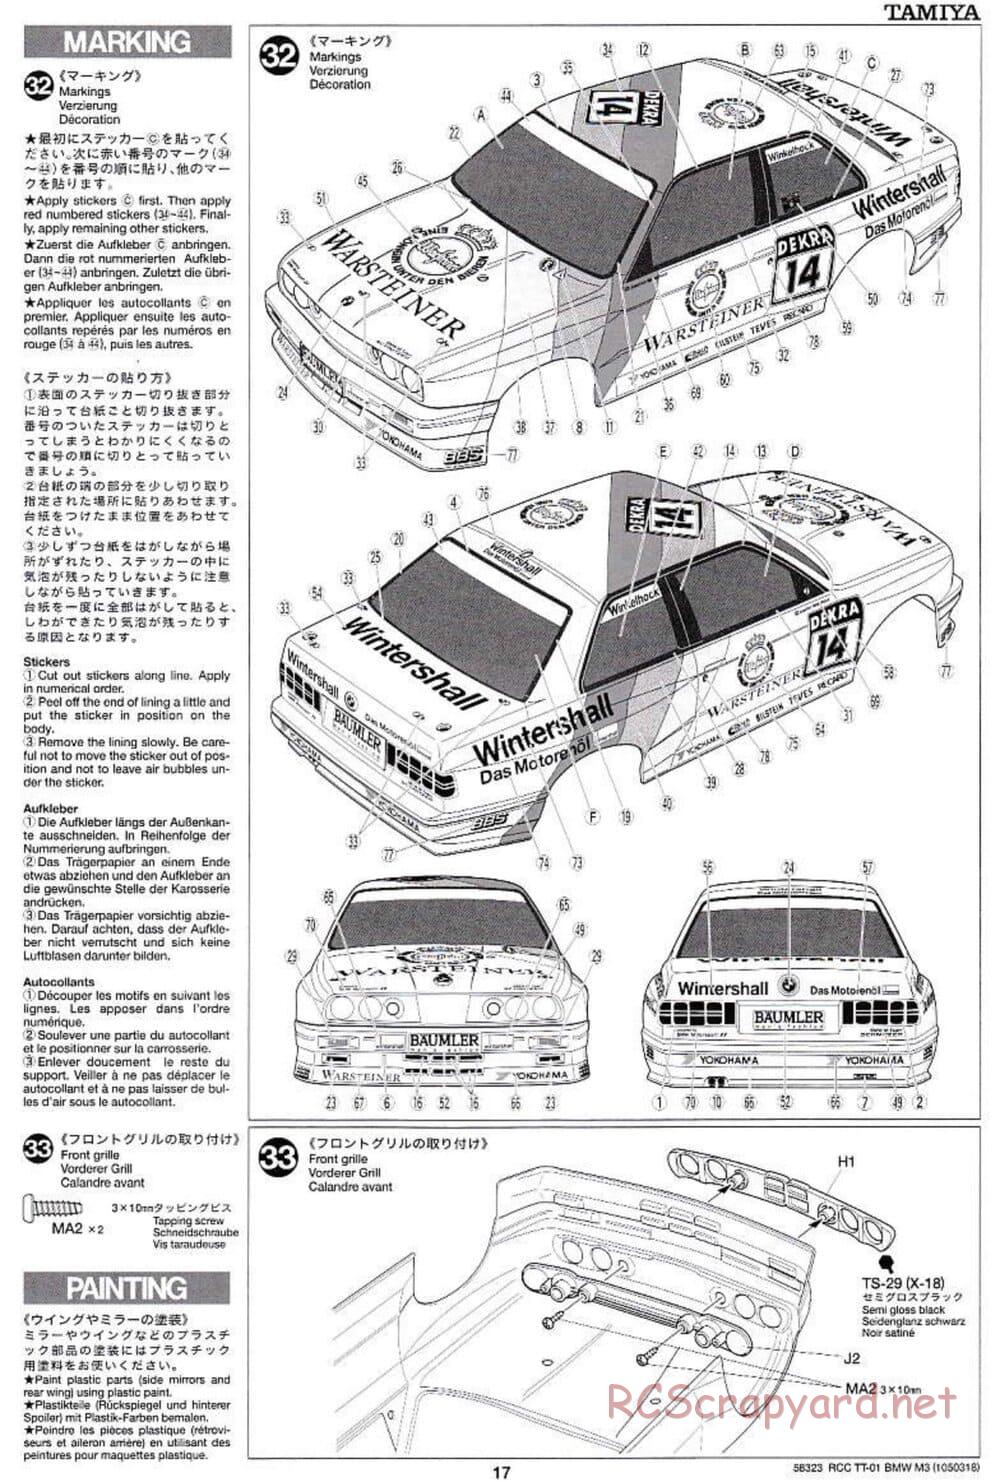 Tamiya - Schnitzer BMW M3 Sport Evo - TT-01 Chassis - Manual - Page 17